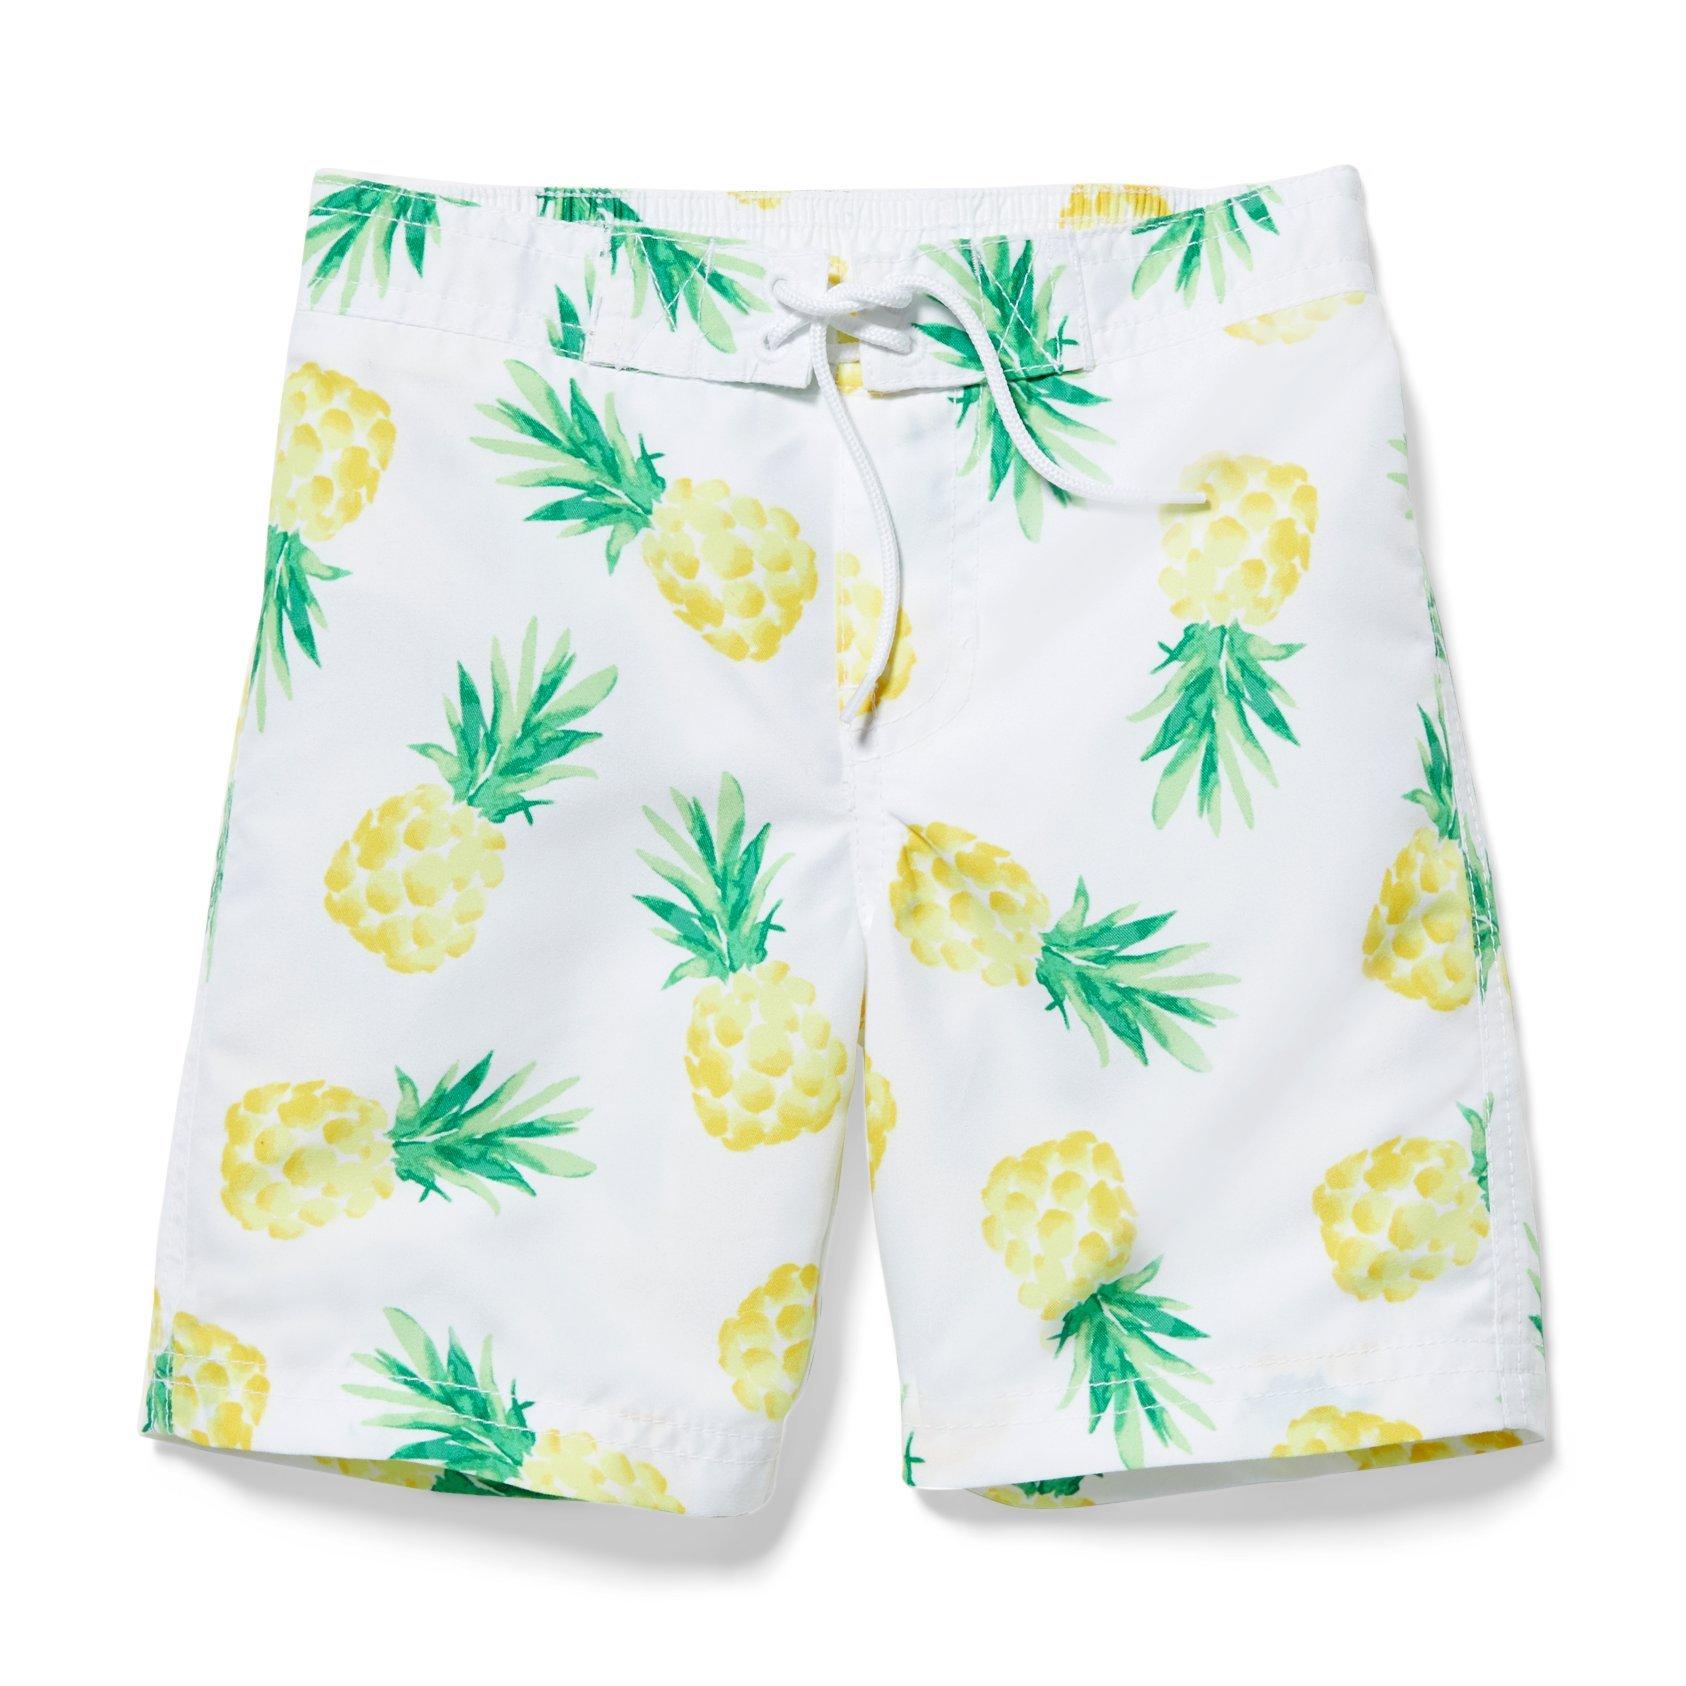 twin matching swimwear, pineapple swim trunks